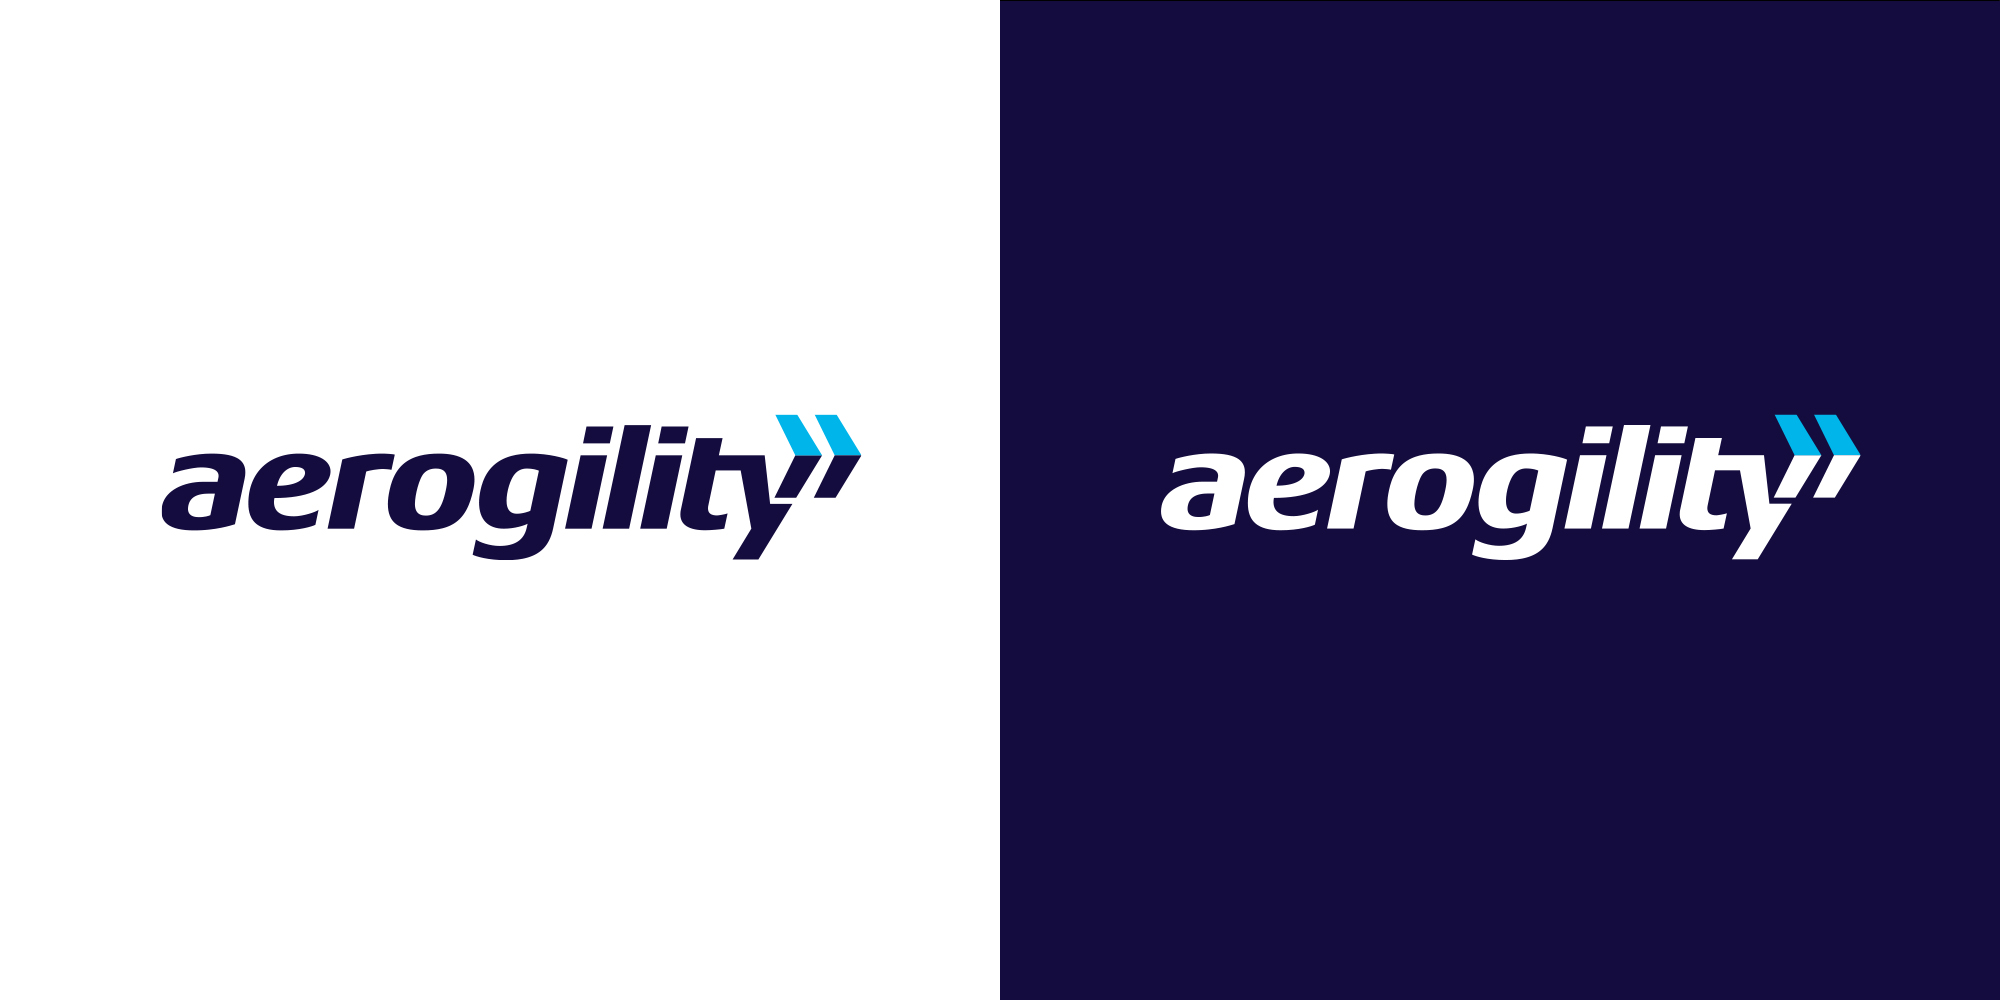 Aerogility logotype evolution